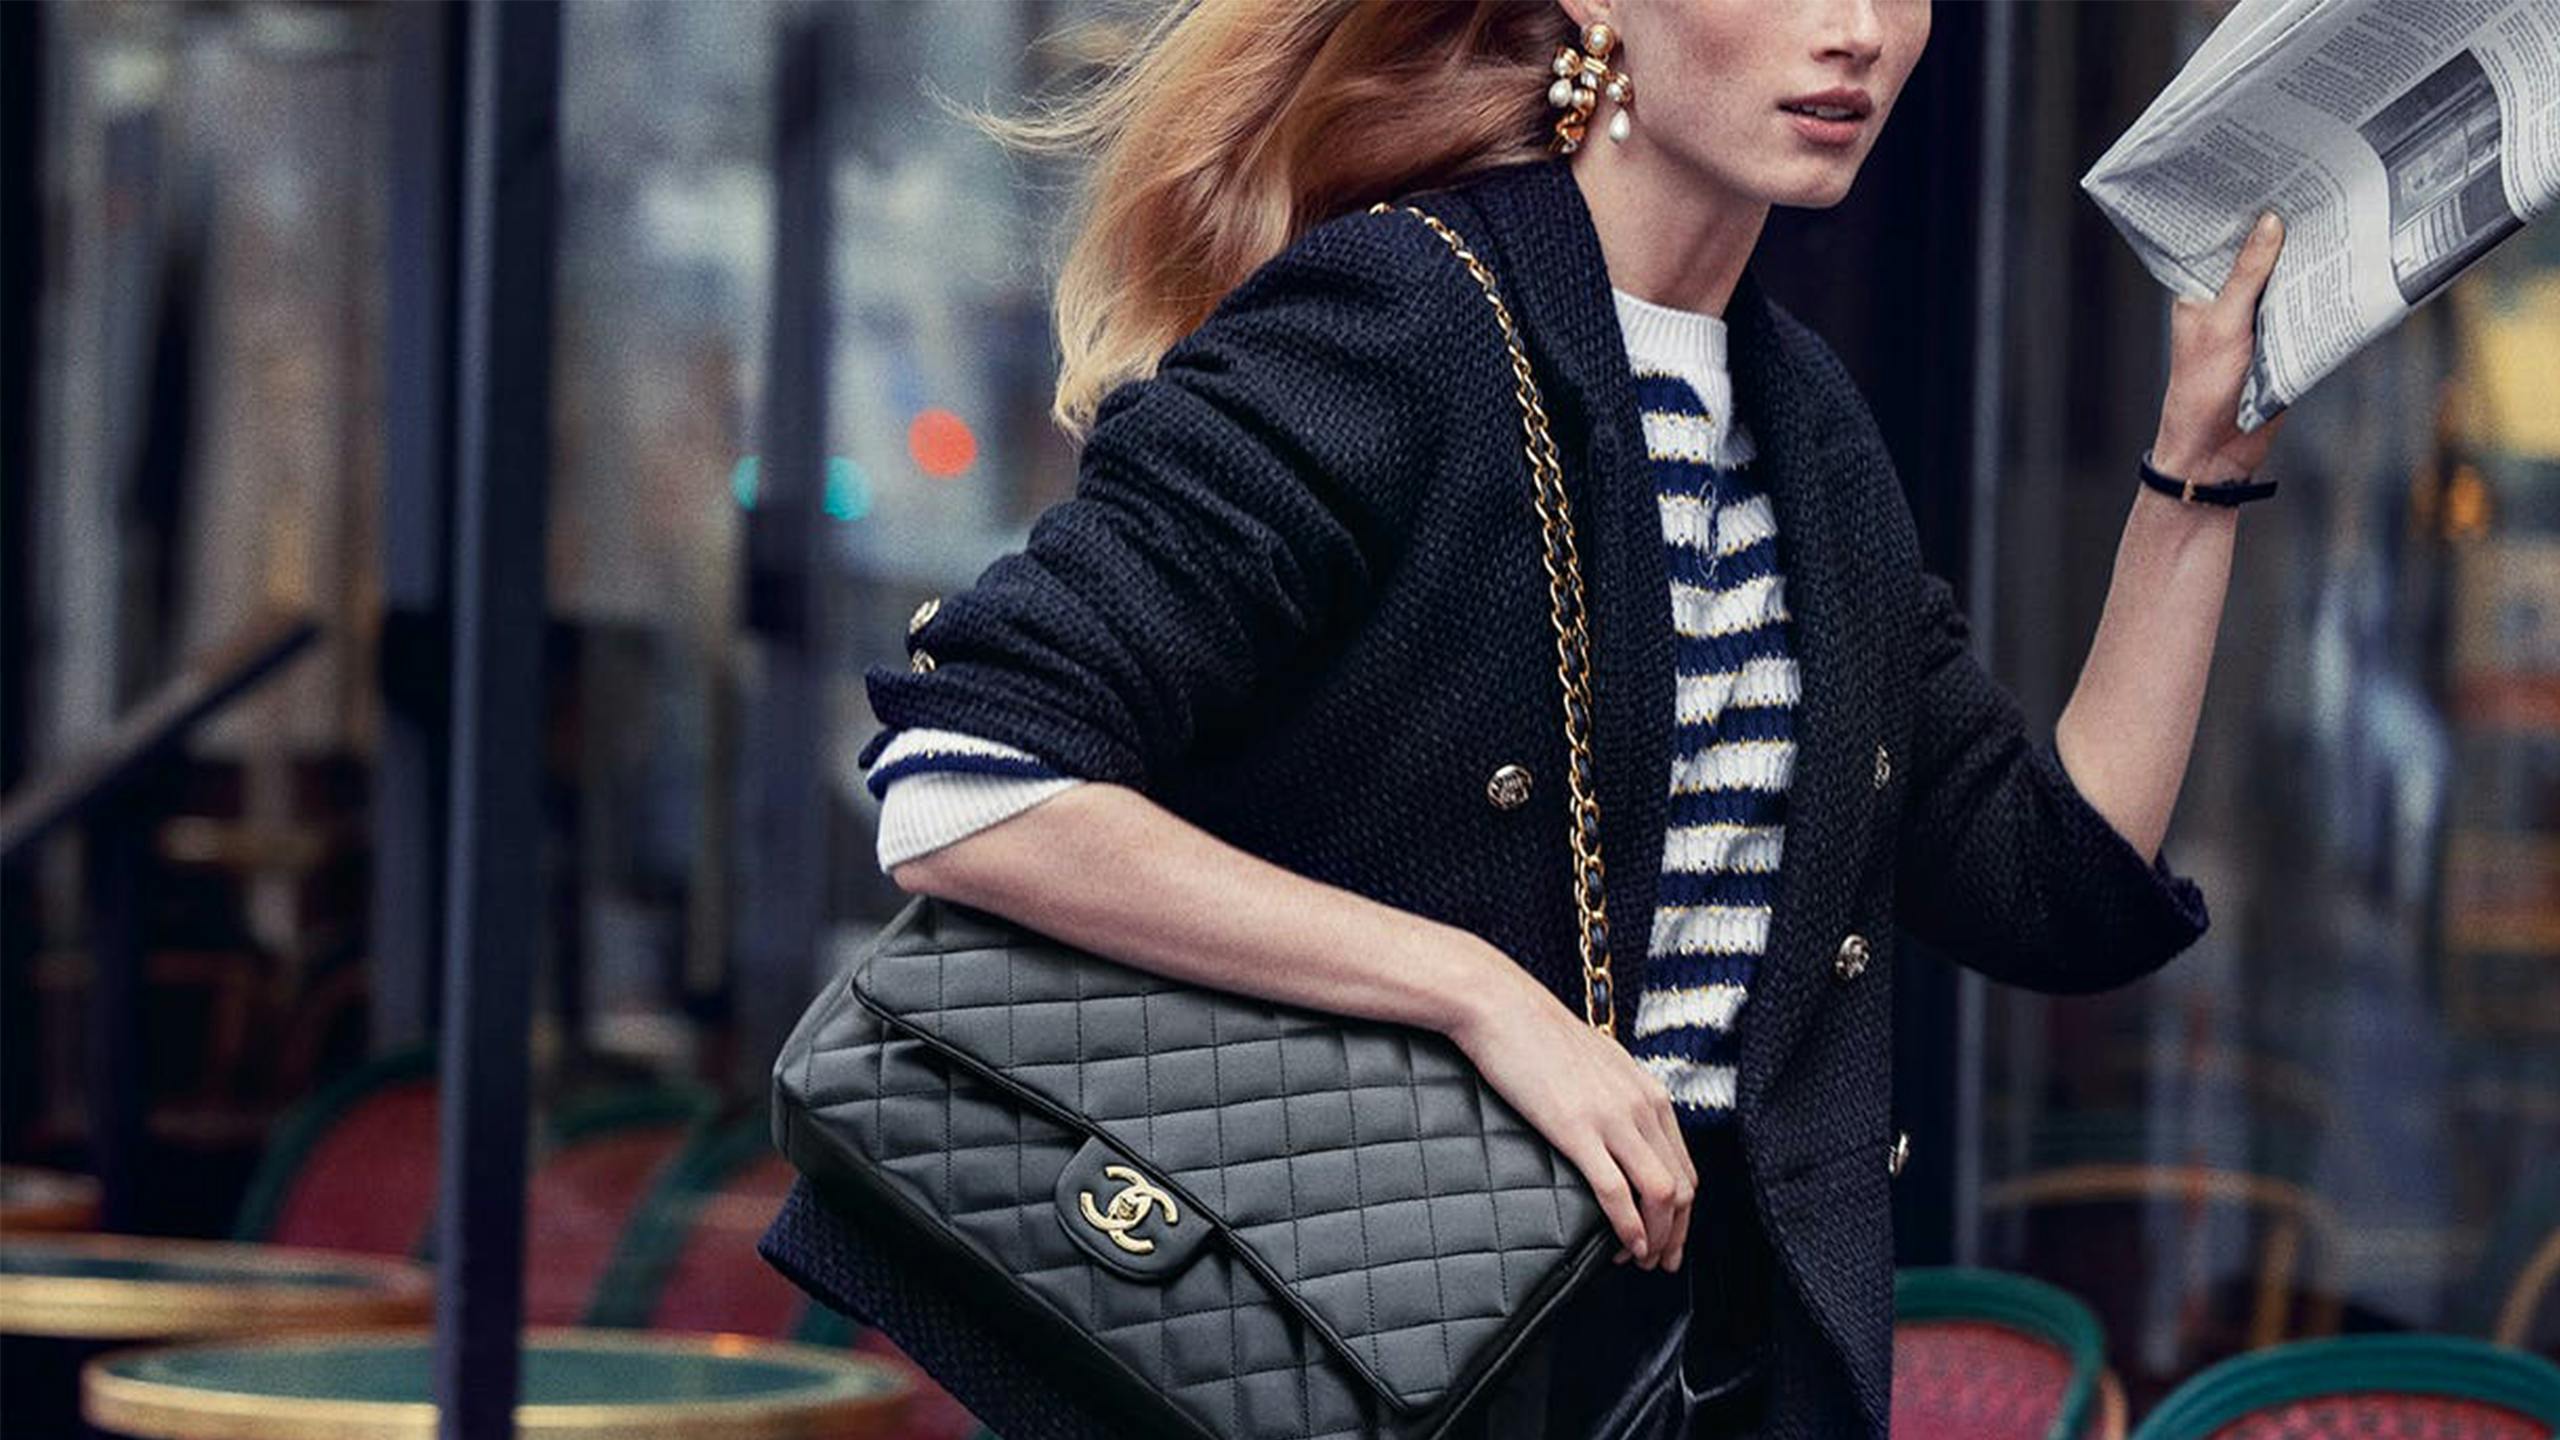 The Chanel Iconic” showcasing the latest handbag